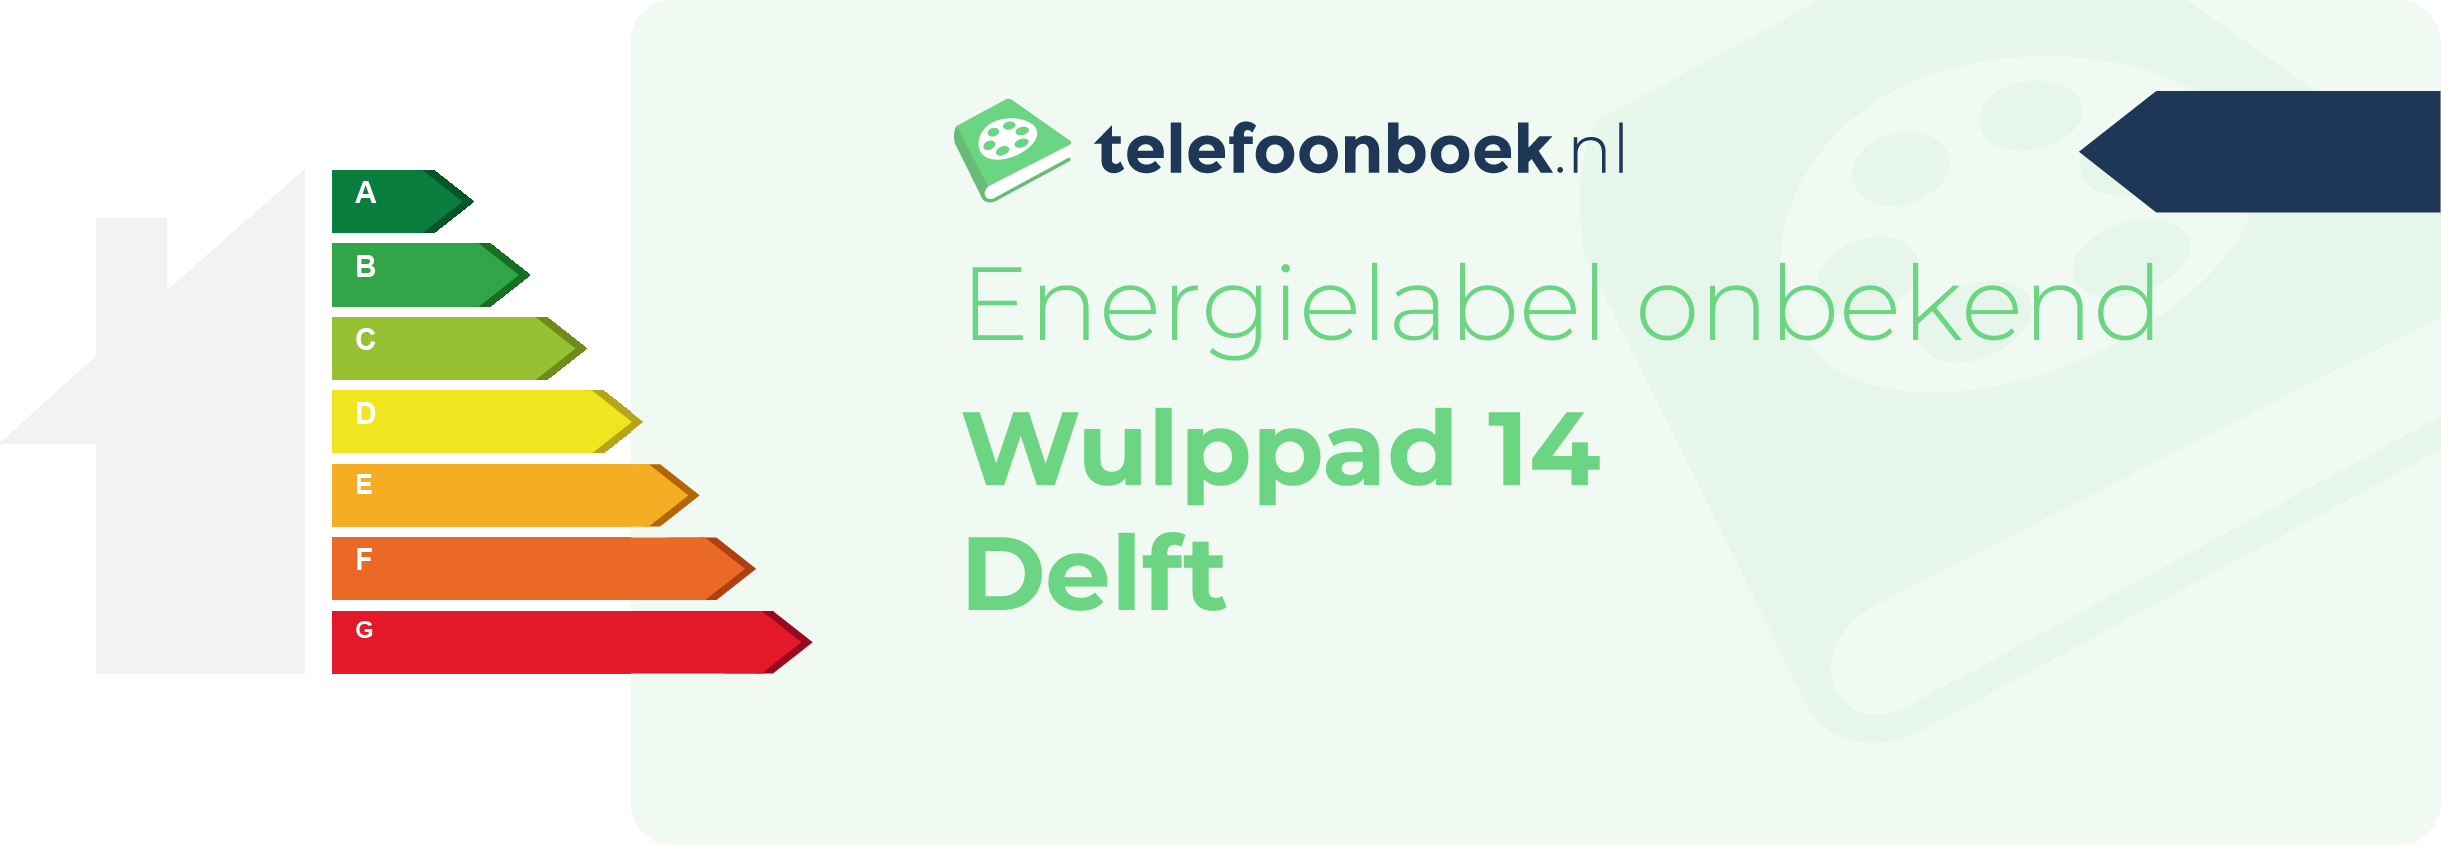 Energielabel Wulppad 14 Delft